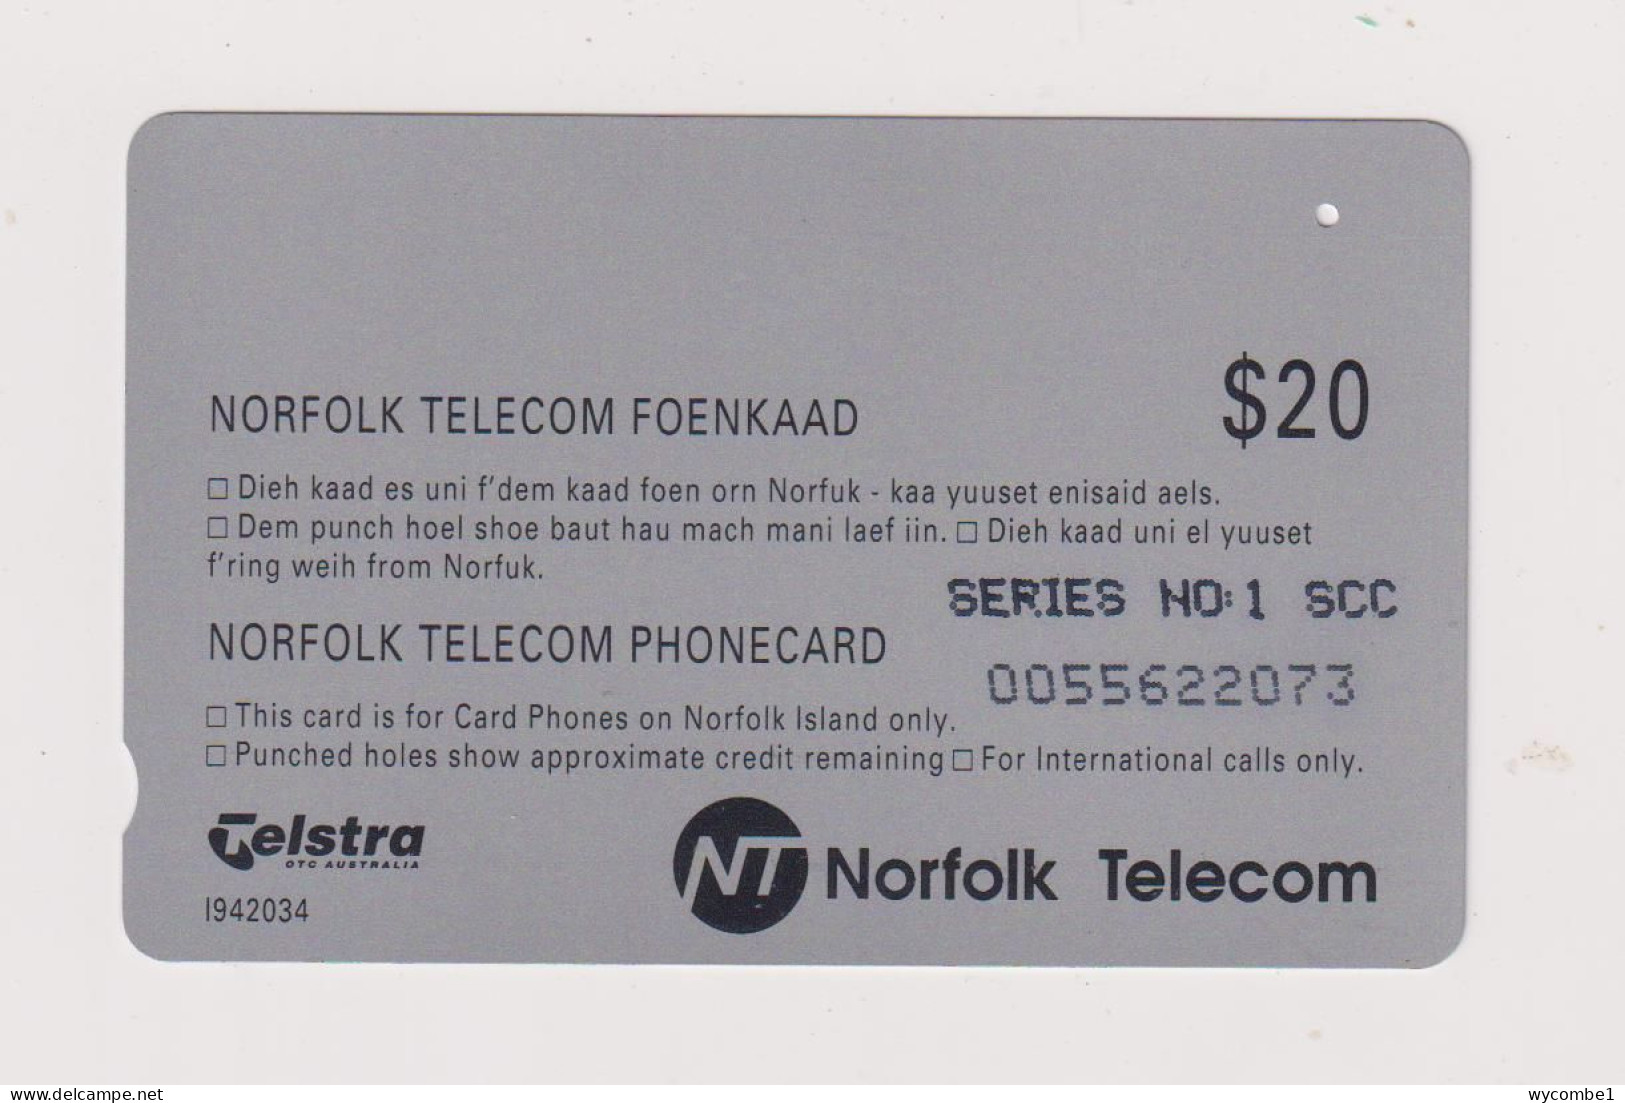 NORFOLK ISLAND - The Bounty Magnetic Phonecard - Ile Norfolk